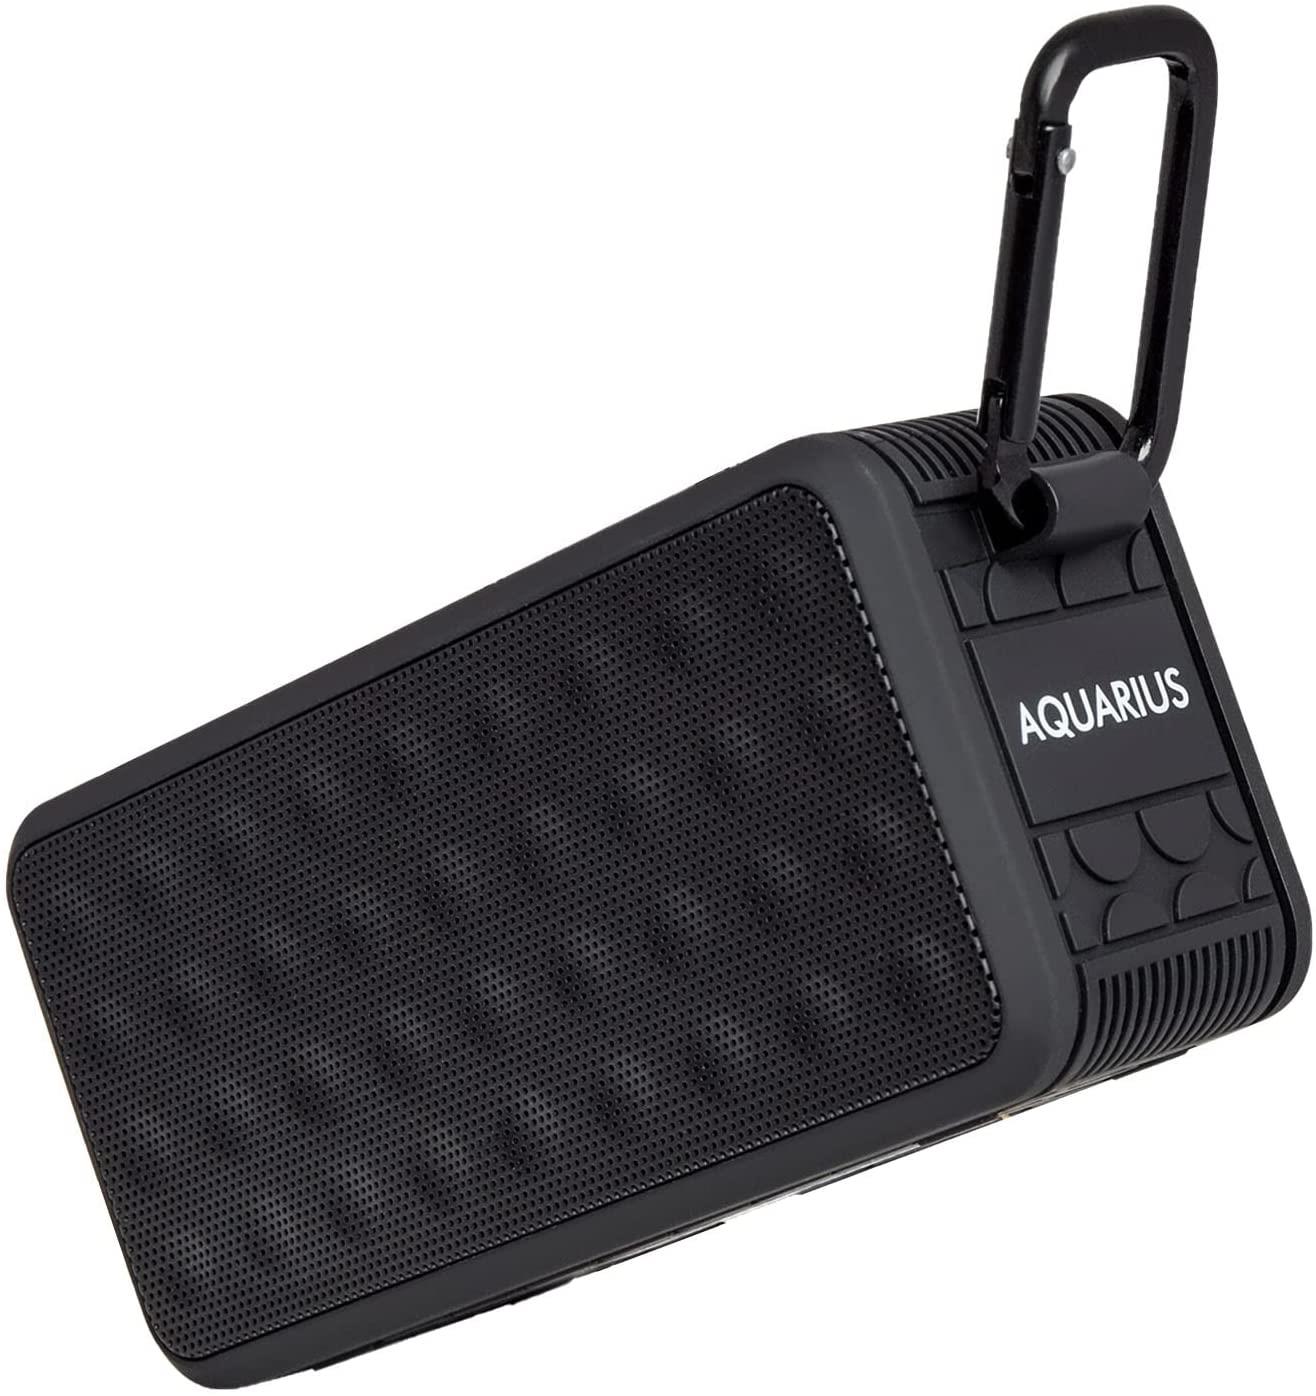 Aquarius Portable & Waterproof Bluetooth Speaker – High Quality Sound & Bass, Black